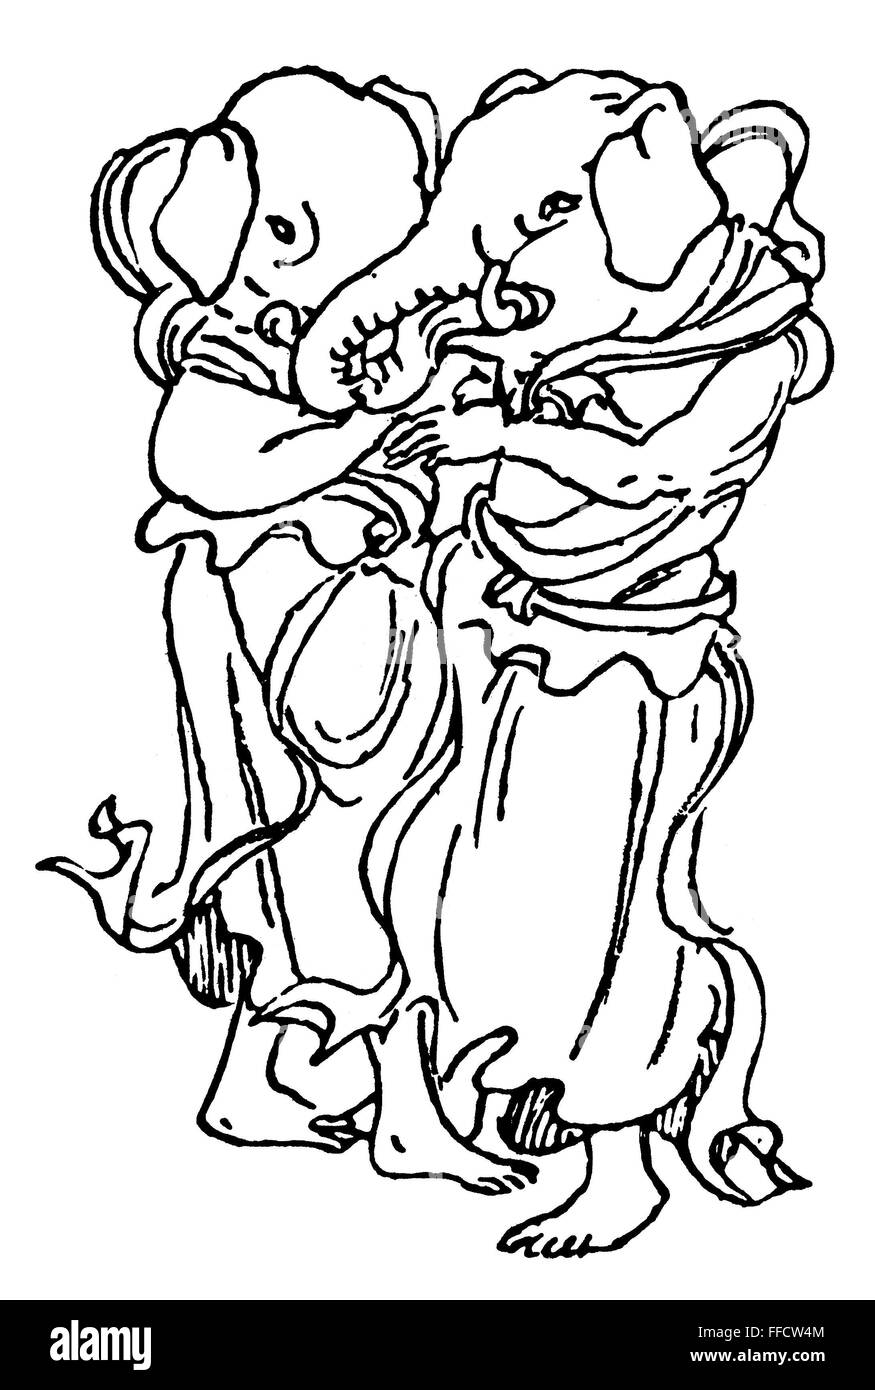 KANGITEN & SHOTEN. /nJapanese Buddhist deities, adapted from the Hindu deity, Ganesh. Deities of marital happiness and good fortune. Line drawing. Stock Photo